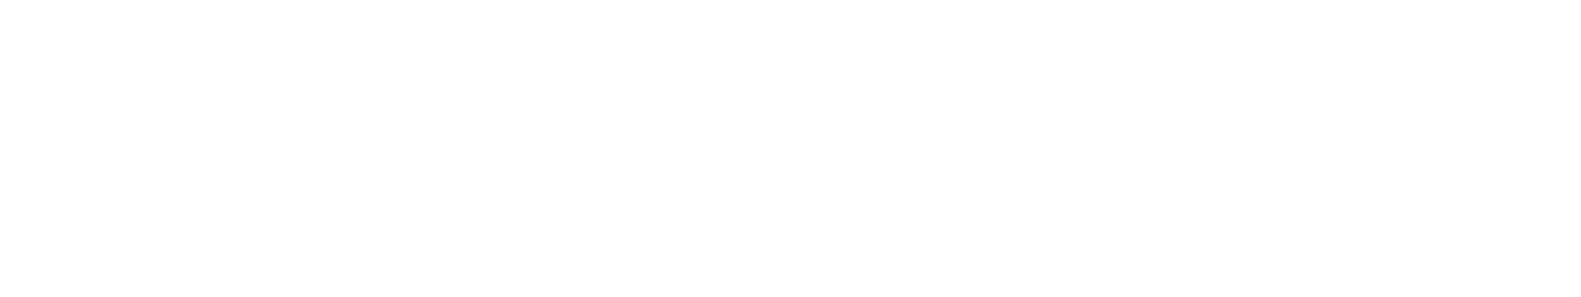 Crocs Logo groß für dunkle Hintergründe (transparentes PNG)